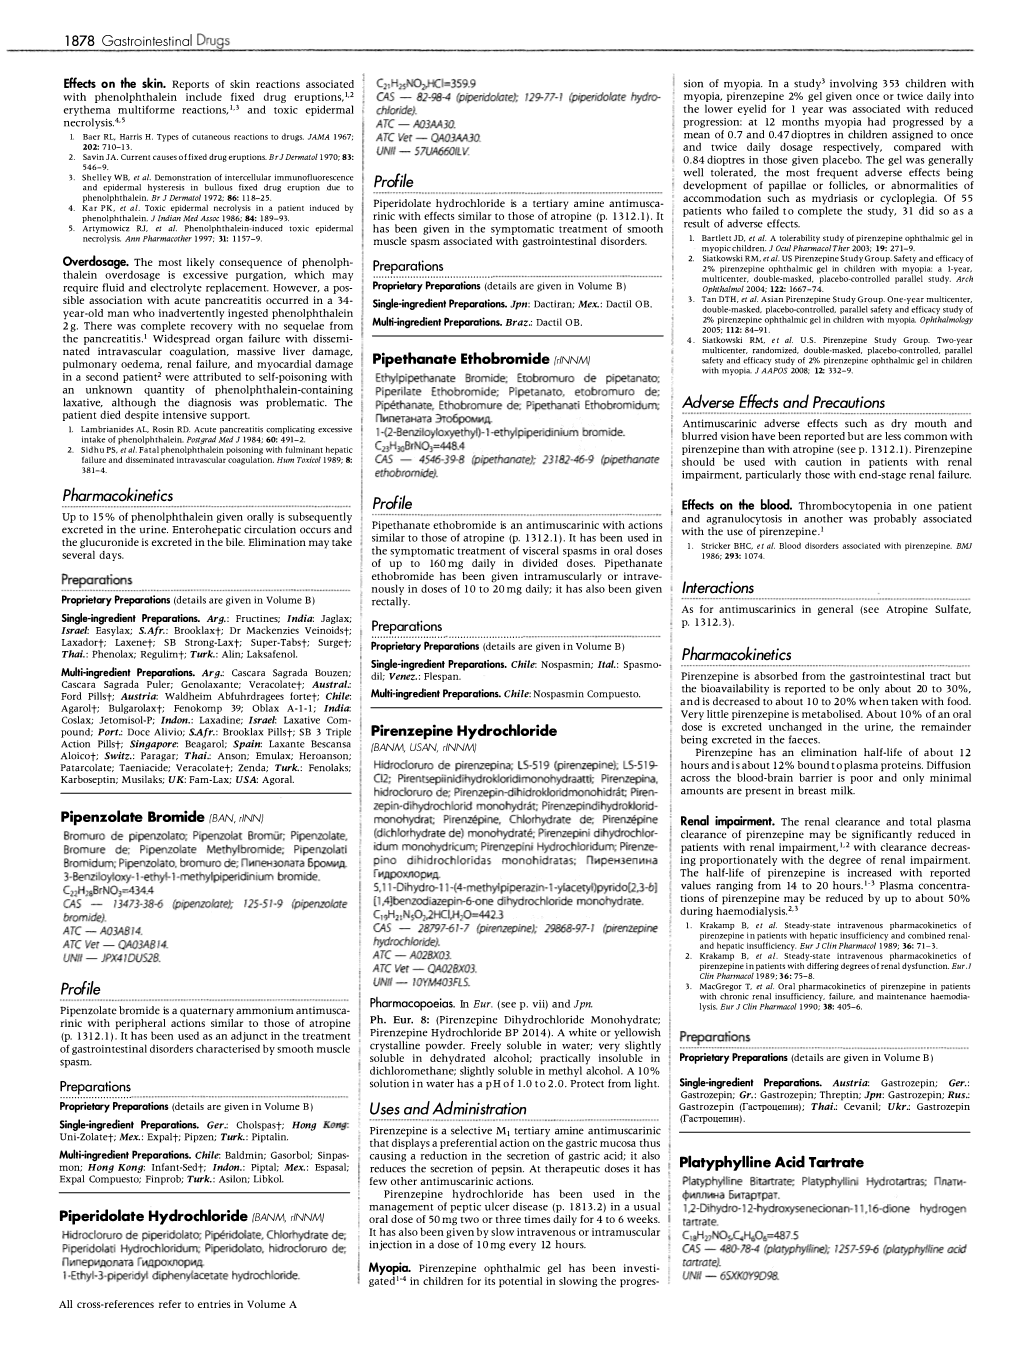 Pharmacokinetics Profile Profile Profile Uses and Administration